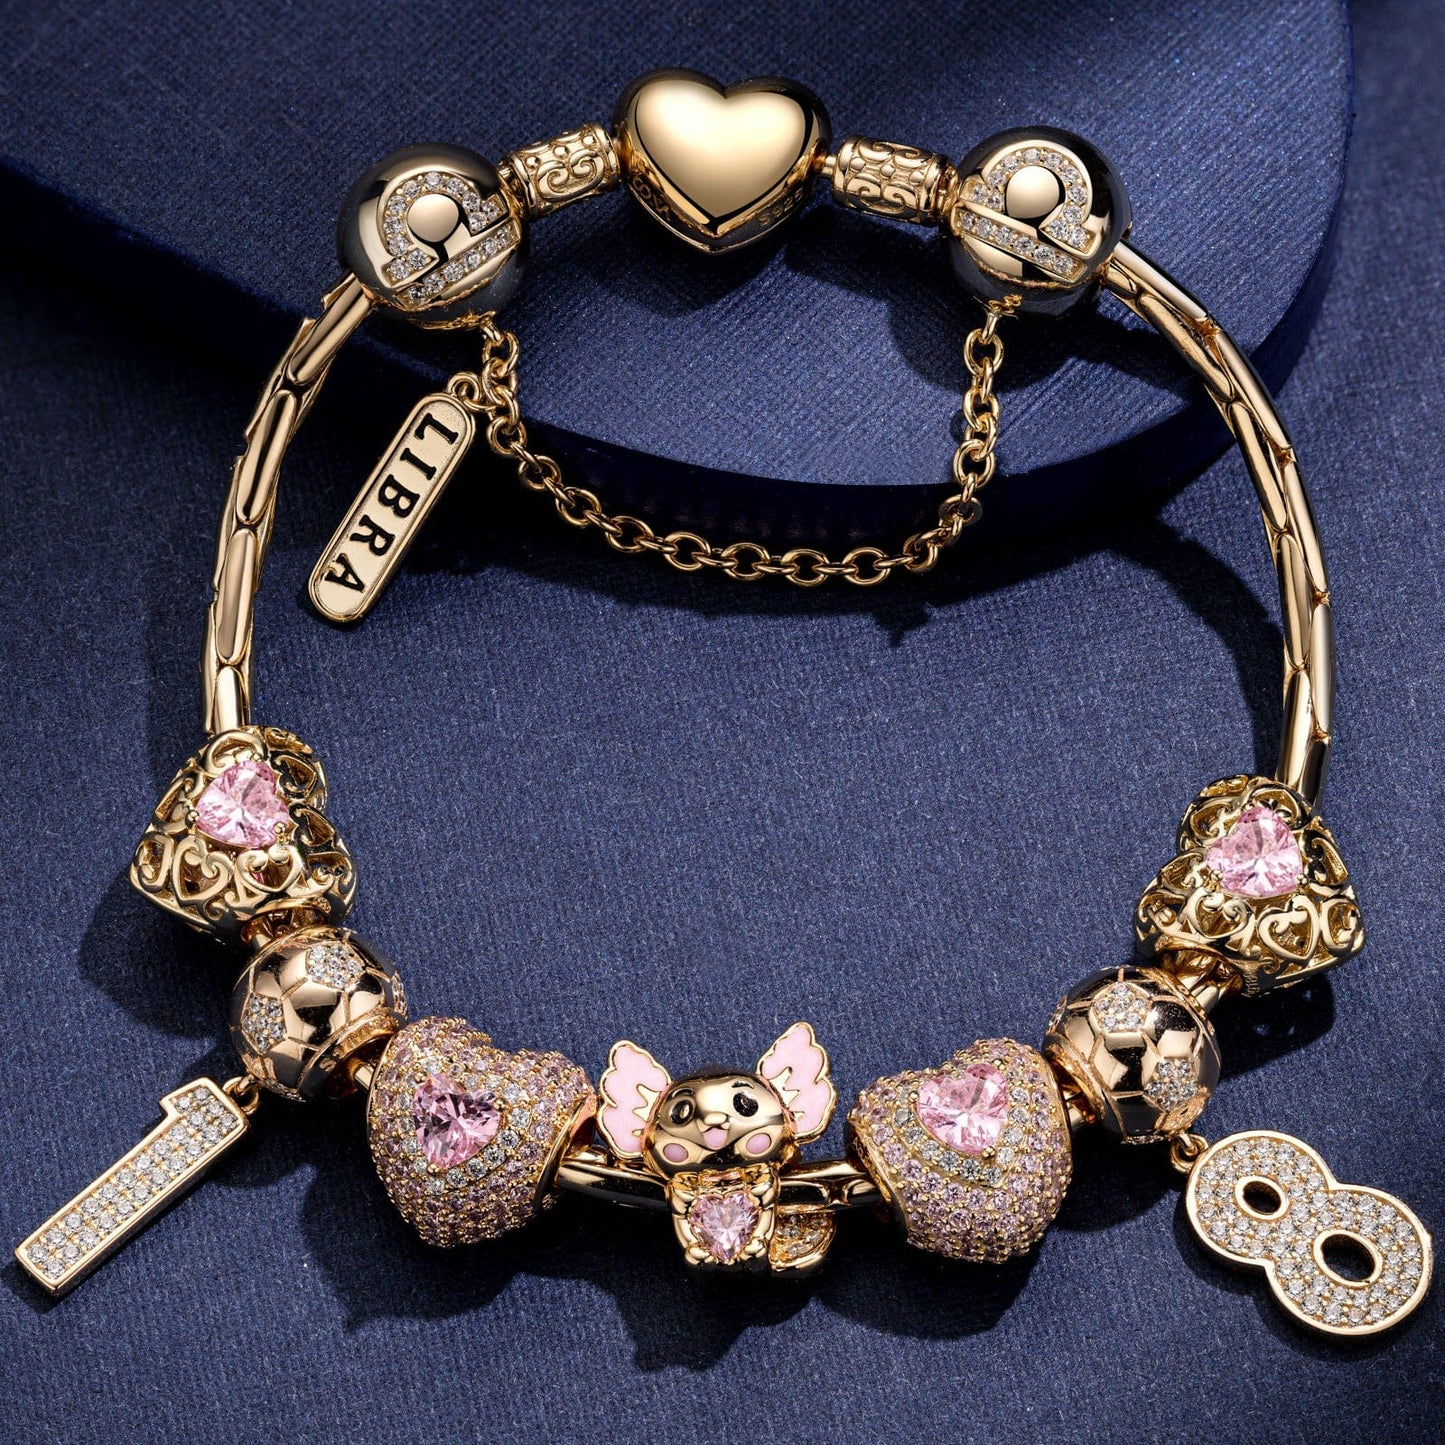 Sterling Silver Lovely Axolotl October Birthstone Charms Bracelet Set With Enamel In 14K Gold Plated